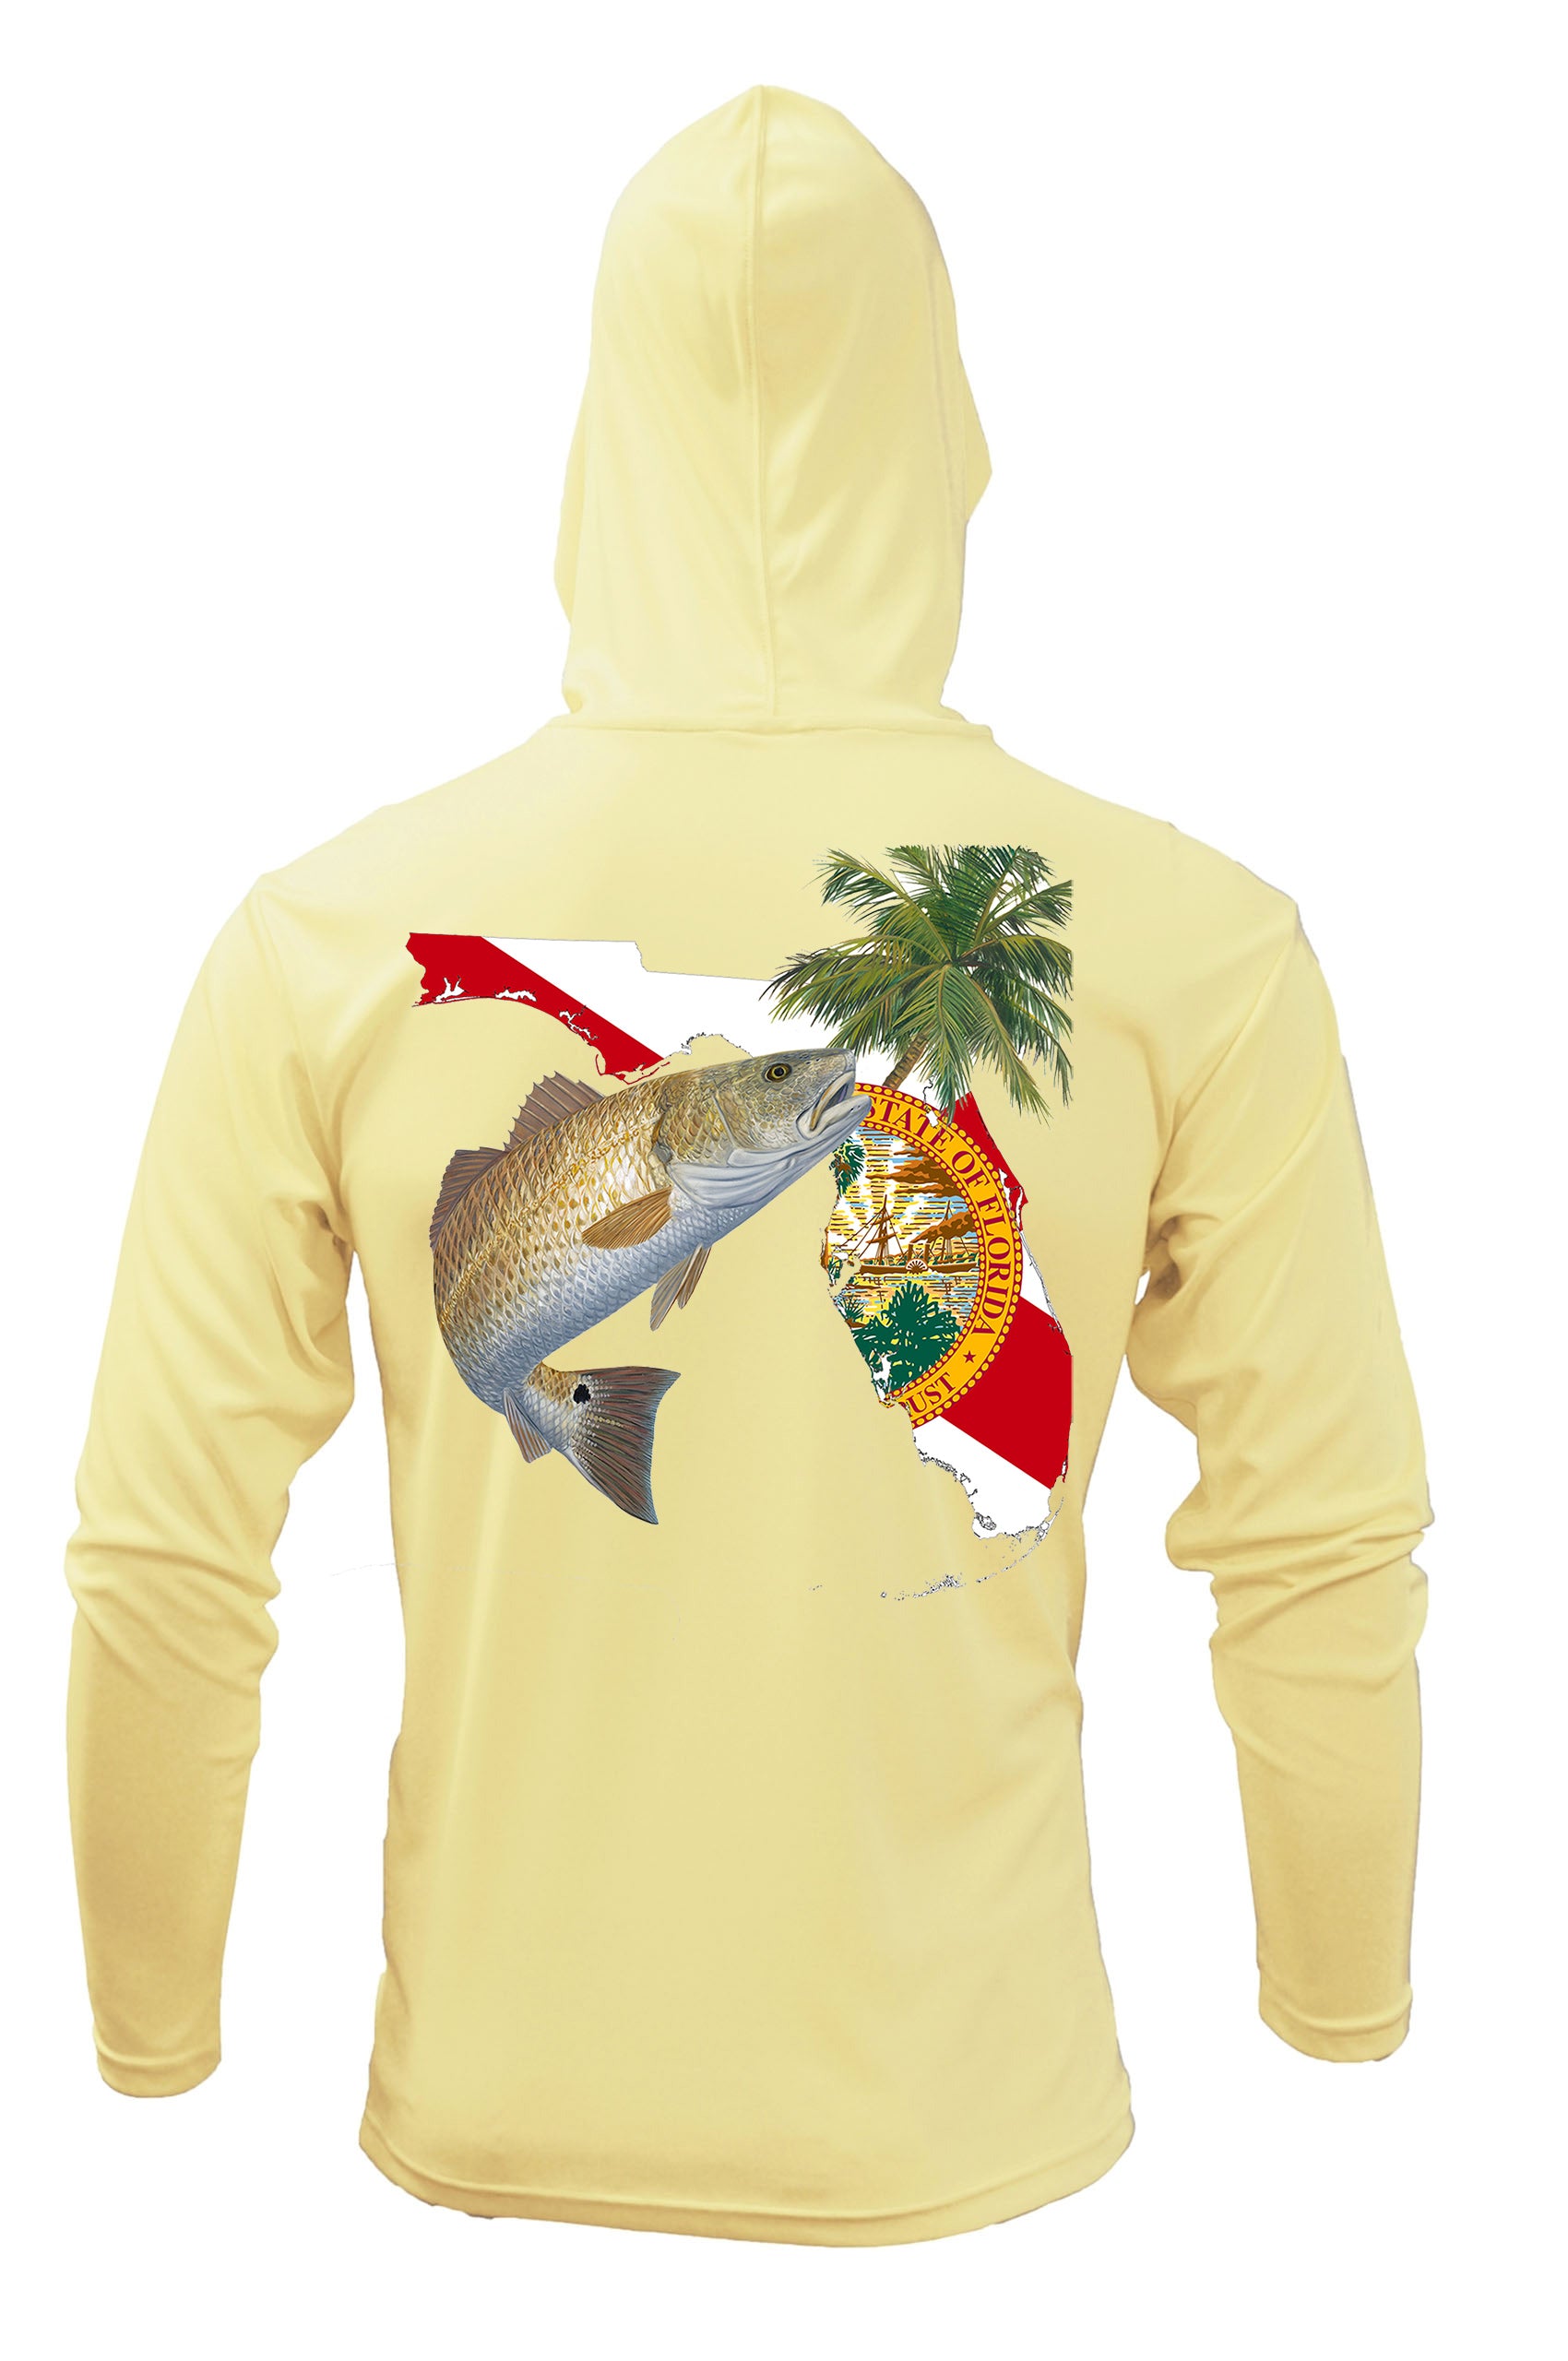 Hoodie Redfish Florida Fishing Shirt Optional Florida Flag Sleeve 3XL / Yellow